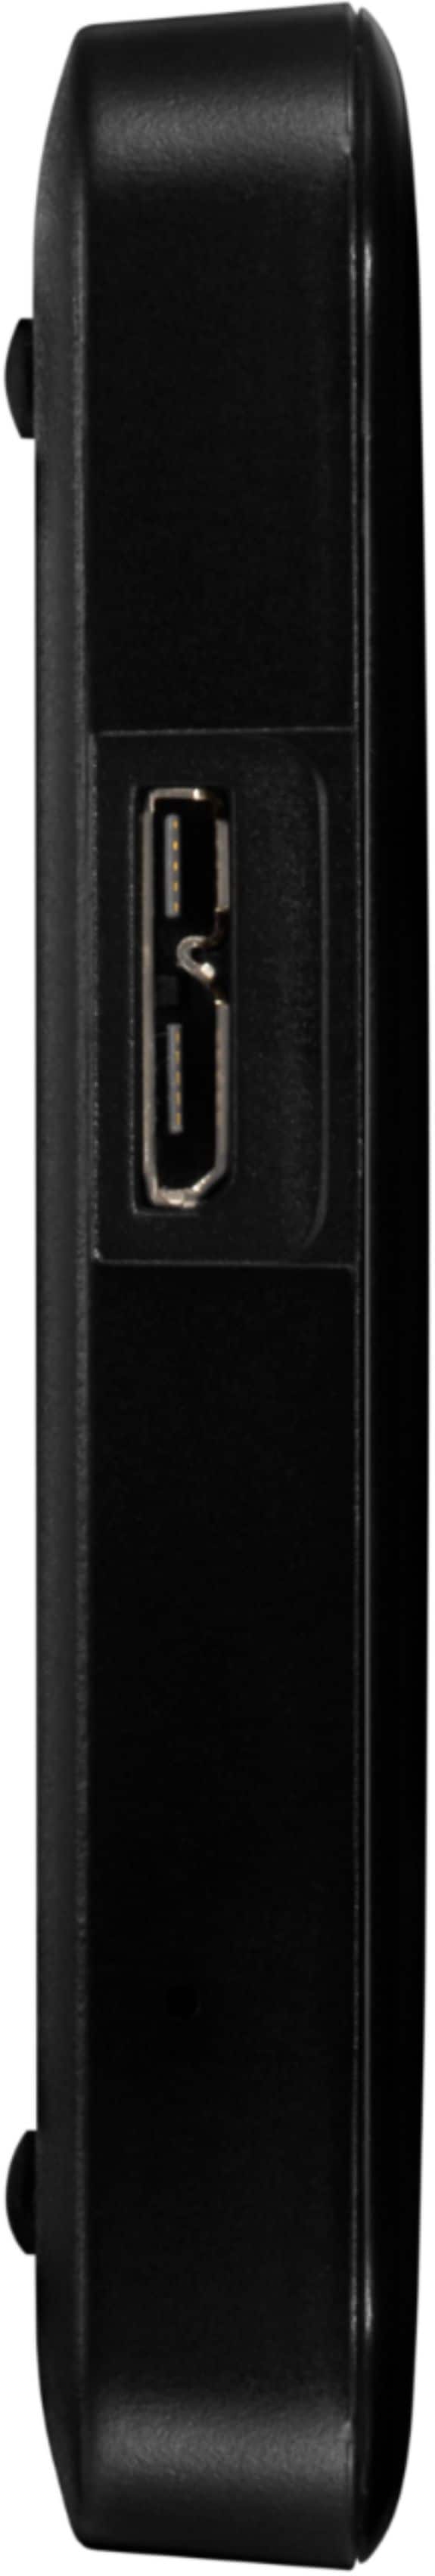 WD - Easystore 2TB External USB 3.0 Portable Hard Drive - Black_2